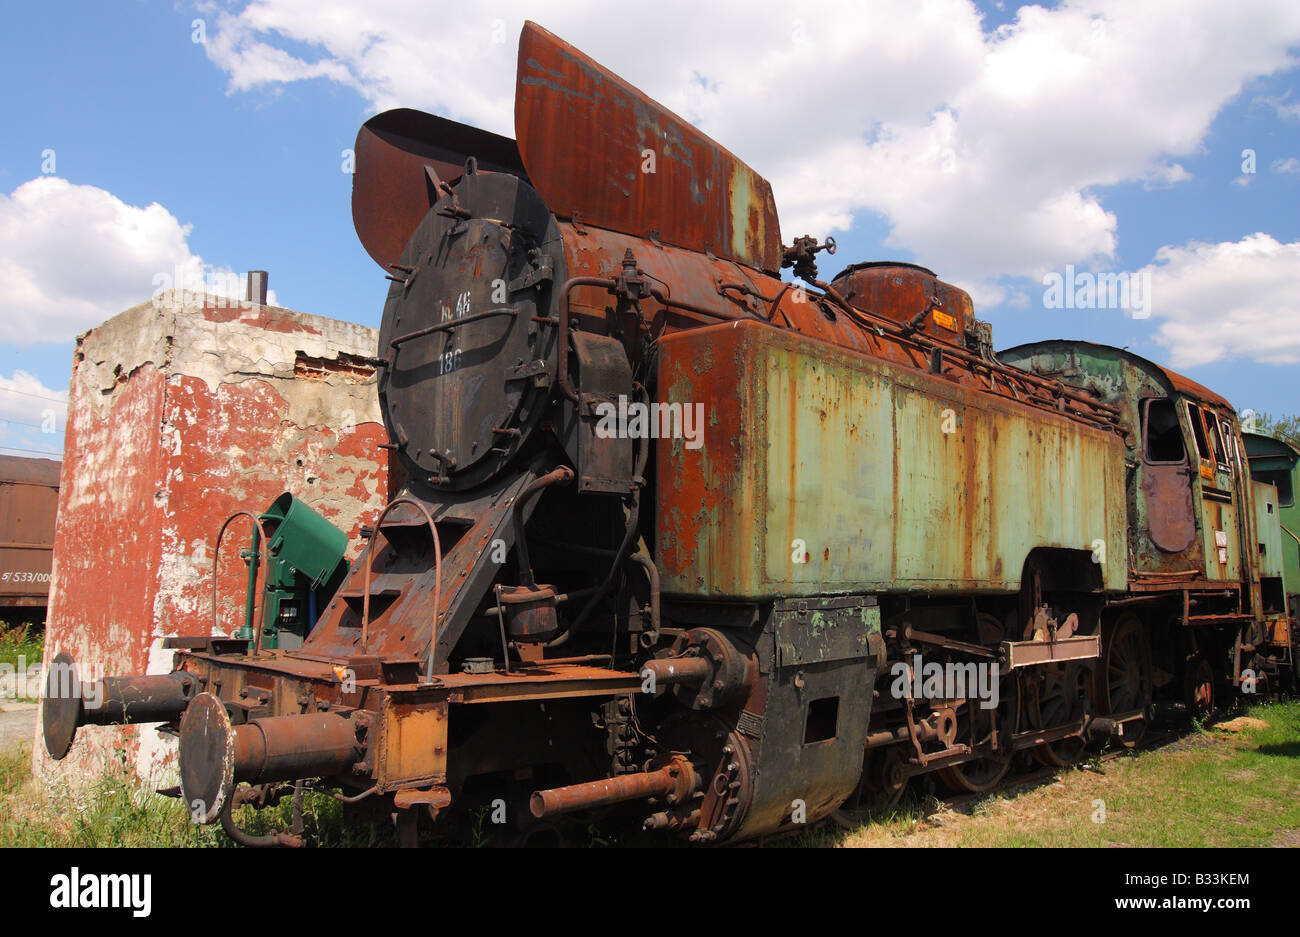 Abandoned steam engine locomotive Stock Photo